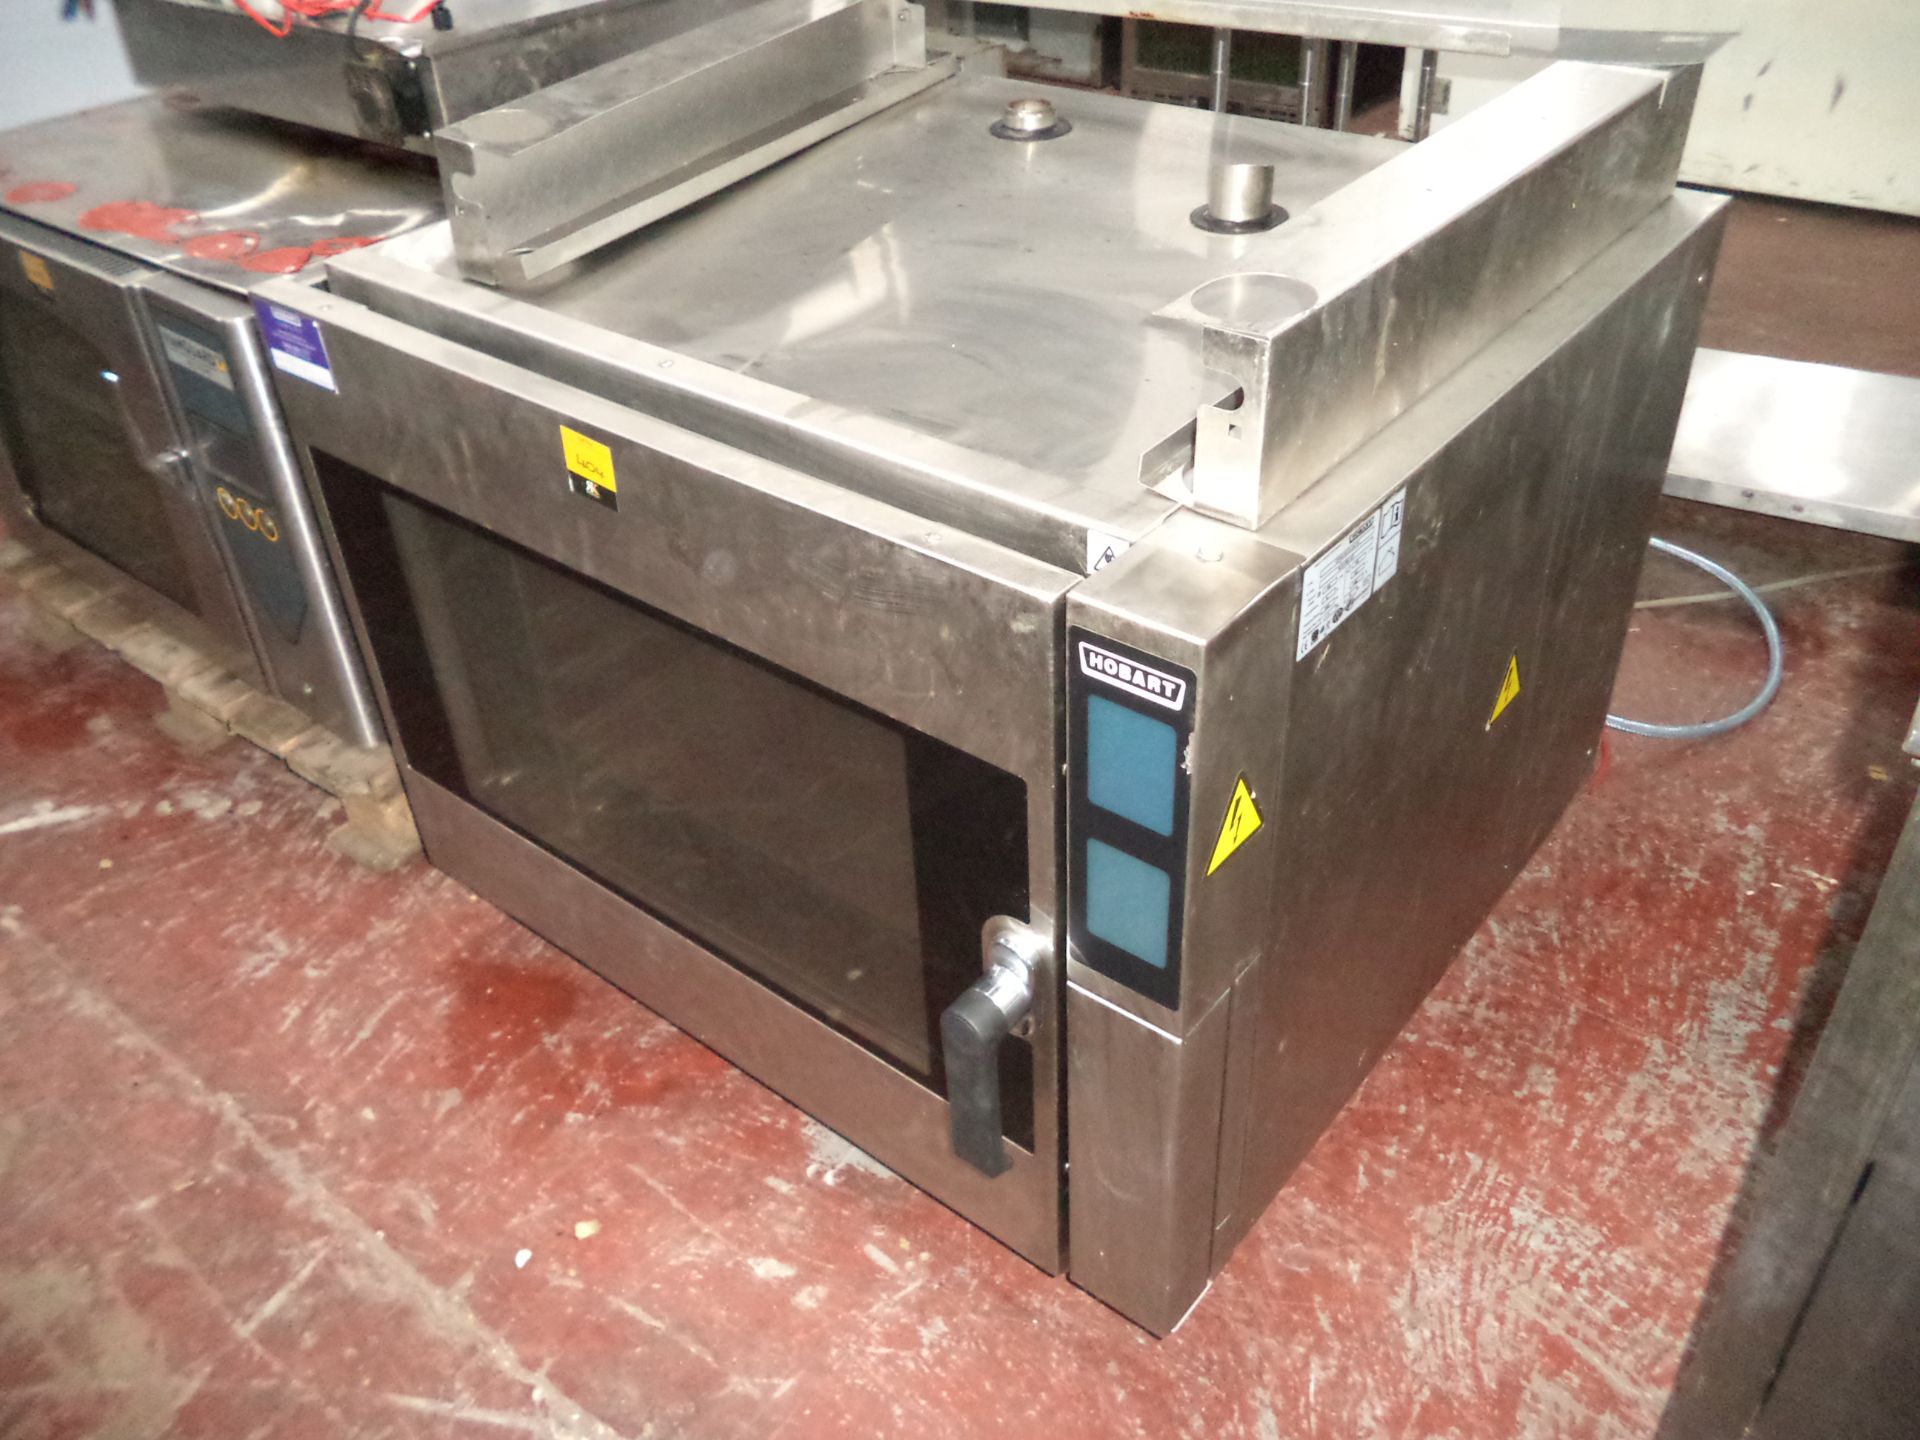 Hobart oven, model CPRO-061G-DA-KK IMPORTANT: Please remember goods successfully bid upon must be